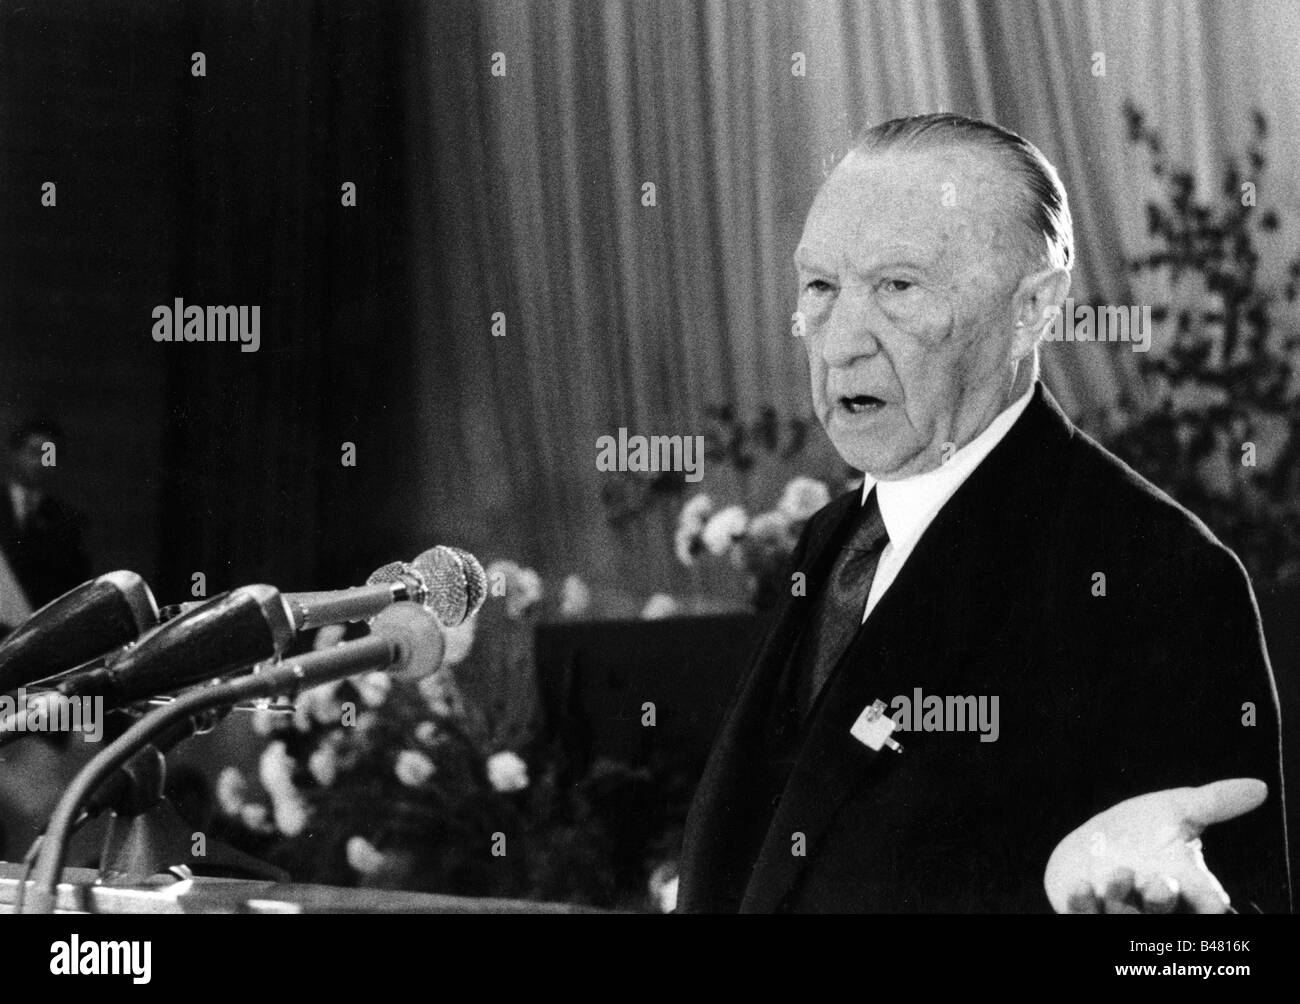 Adenauer, Konrad, 5.1.1876 - 19.4.1967, German politician (CDU), chancellor 1949 - 1963, half length, speech at 11th party conference of CDU, Westfalenhalle, Dortmund, 3.6.1962, Stock Photo